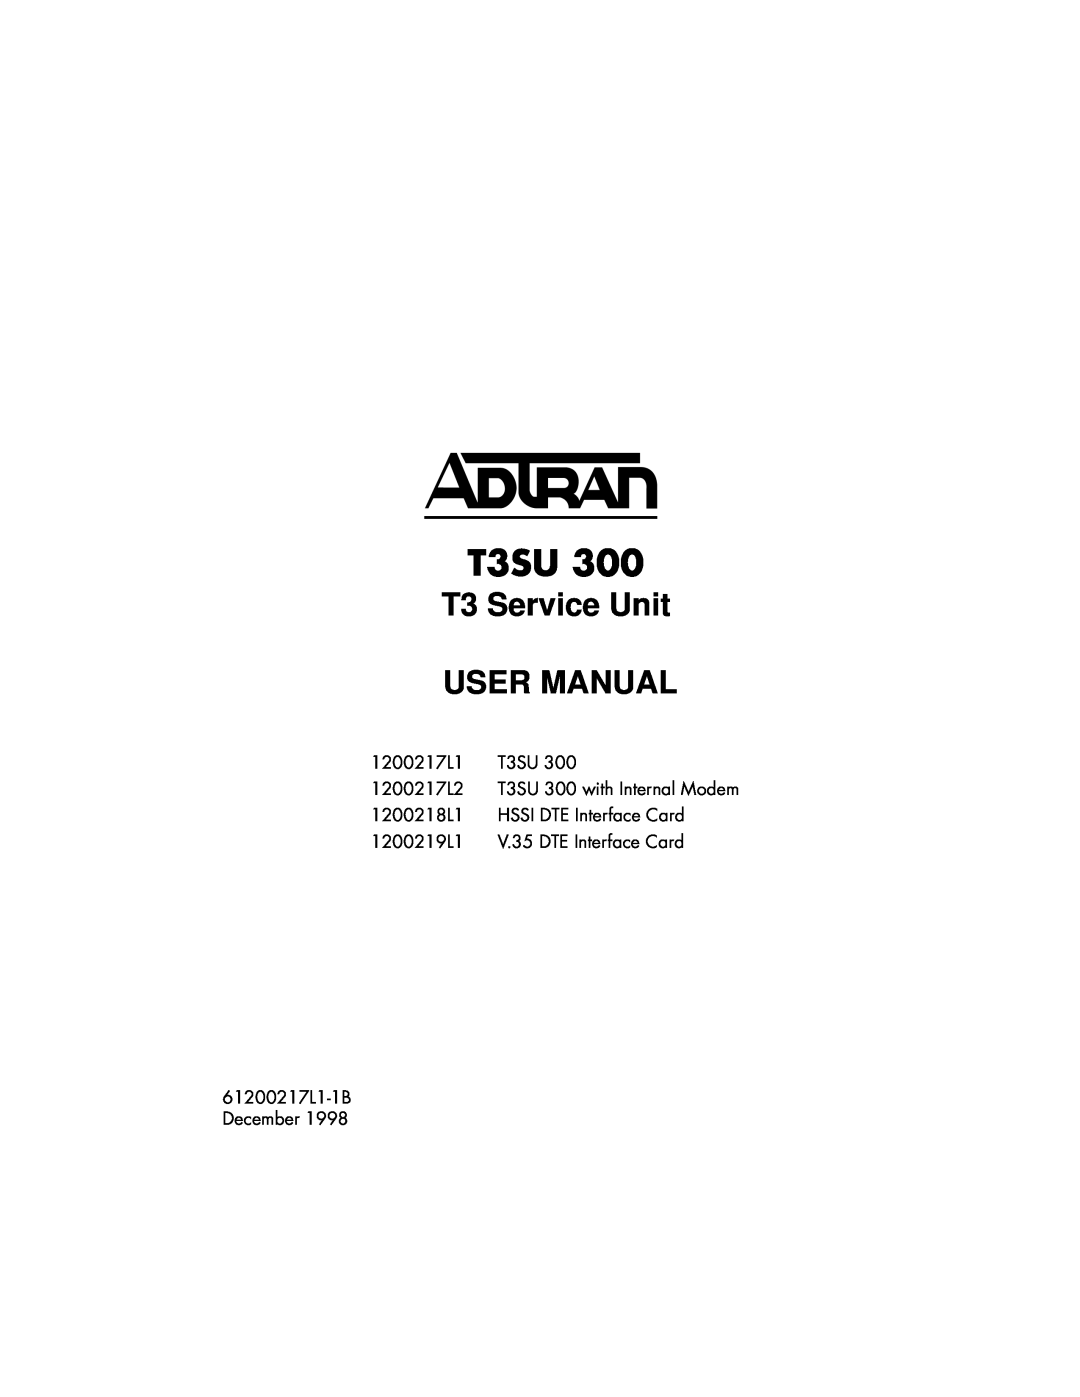 ADTRAN T3SU 300 user manual T3 Service Unit USER MANUAL 